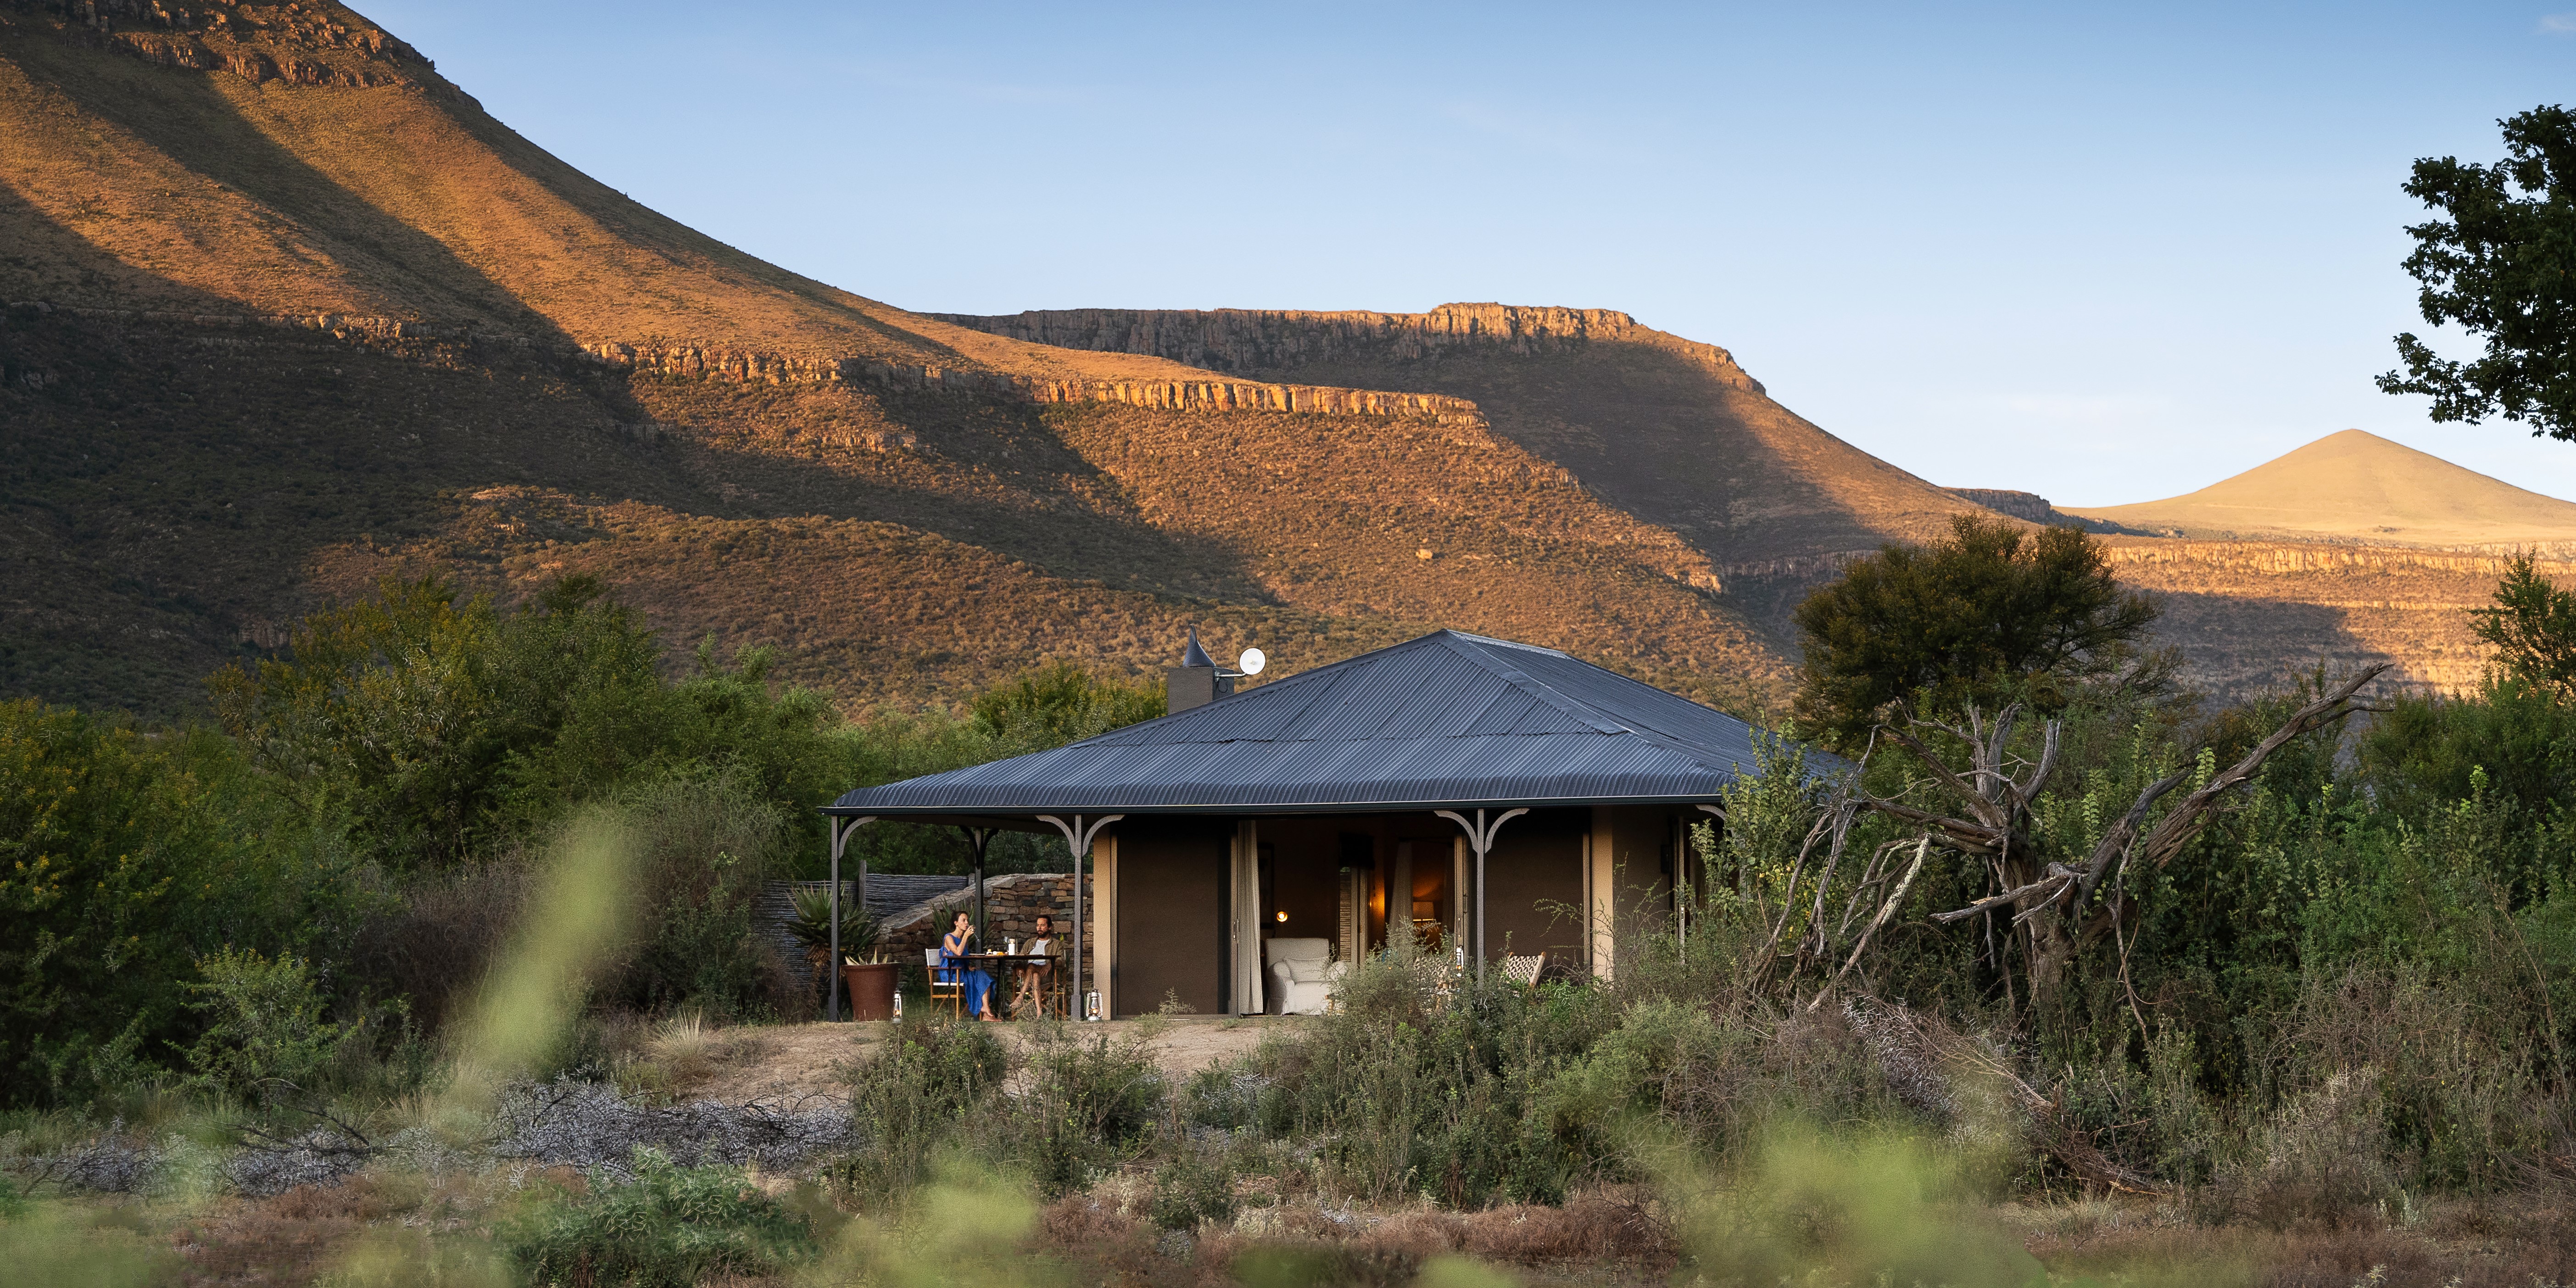 Karoo Lodge overhauled